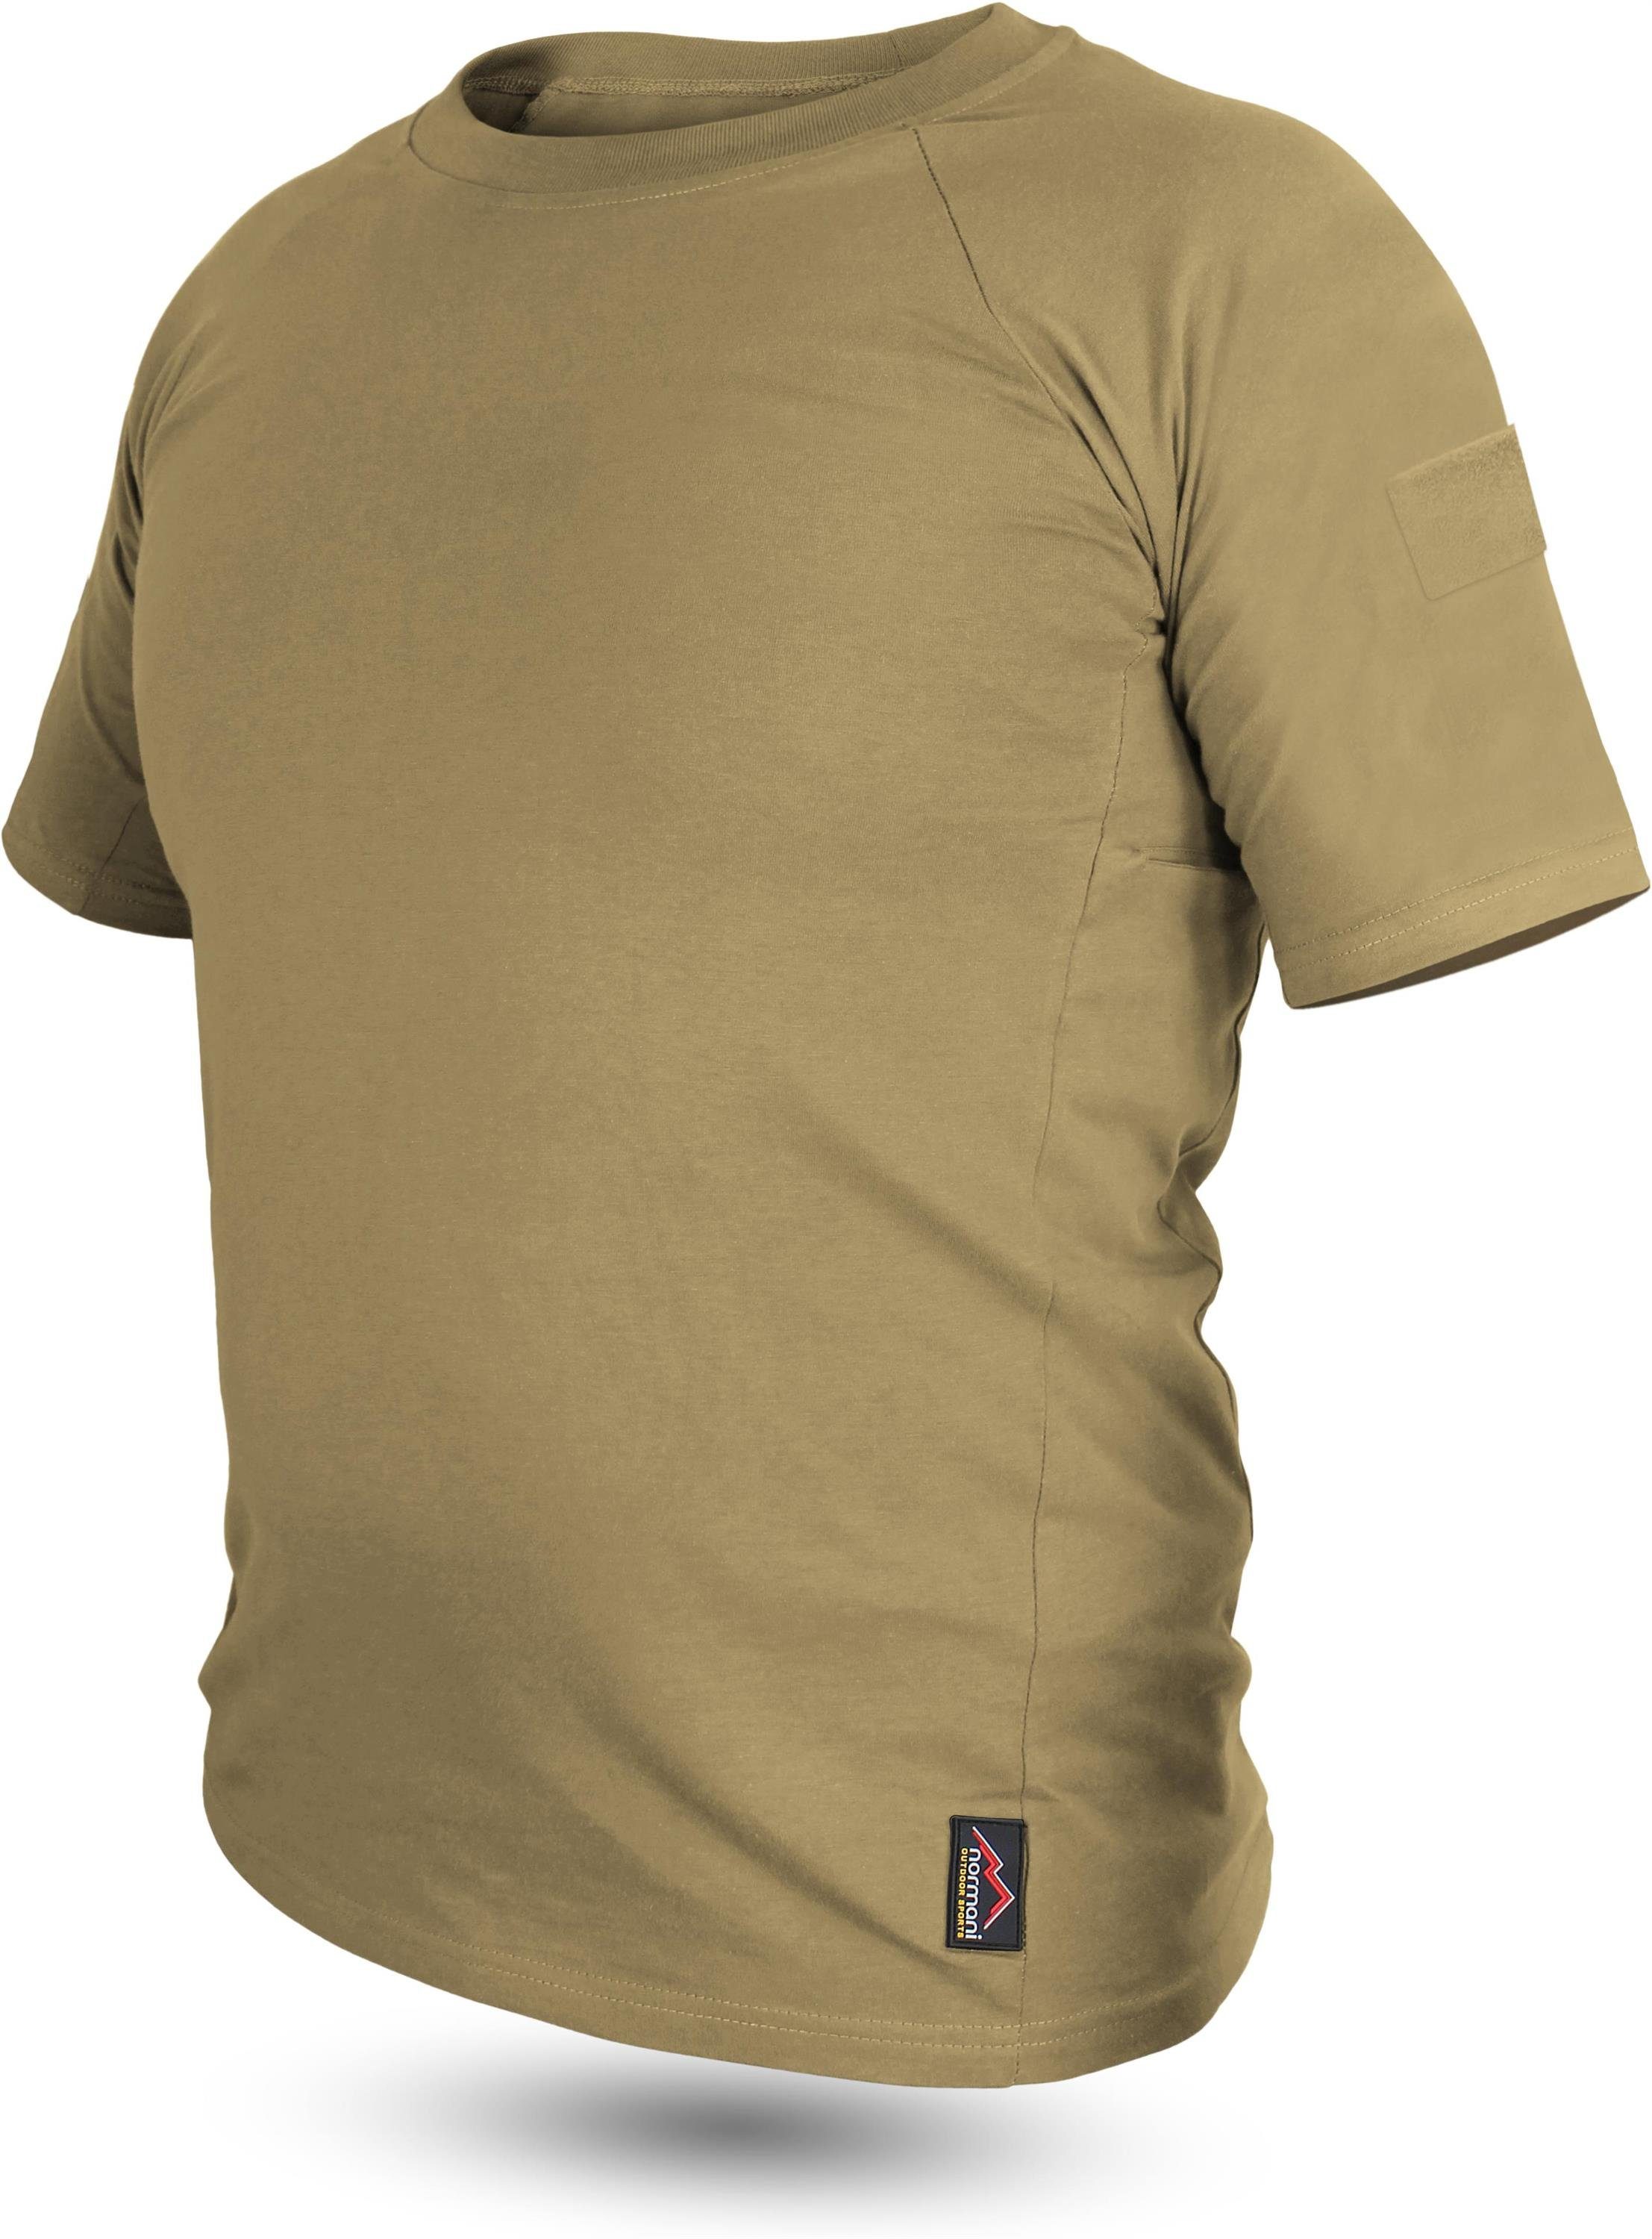 normani Funktionsshirt Herren Taktisches T-Shirt Captain Kurzarm Kampfshirt mit Klettflächen auf den Armen Sommer T-Shirt Paintball Shirt Khaki